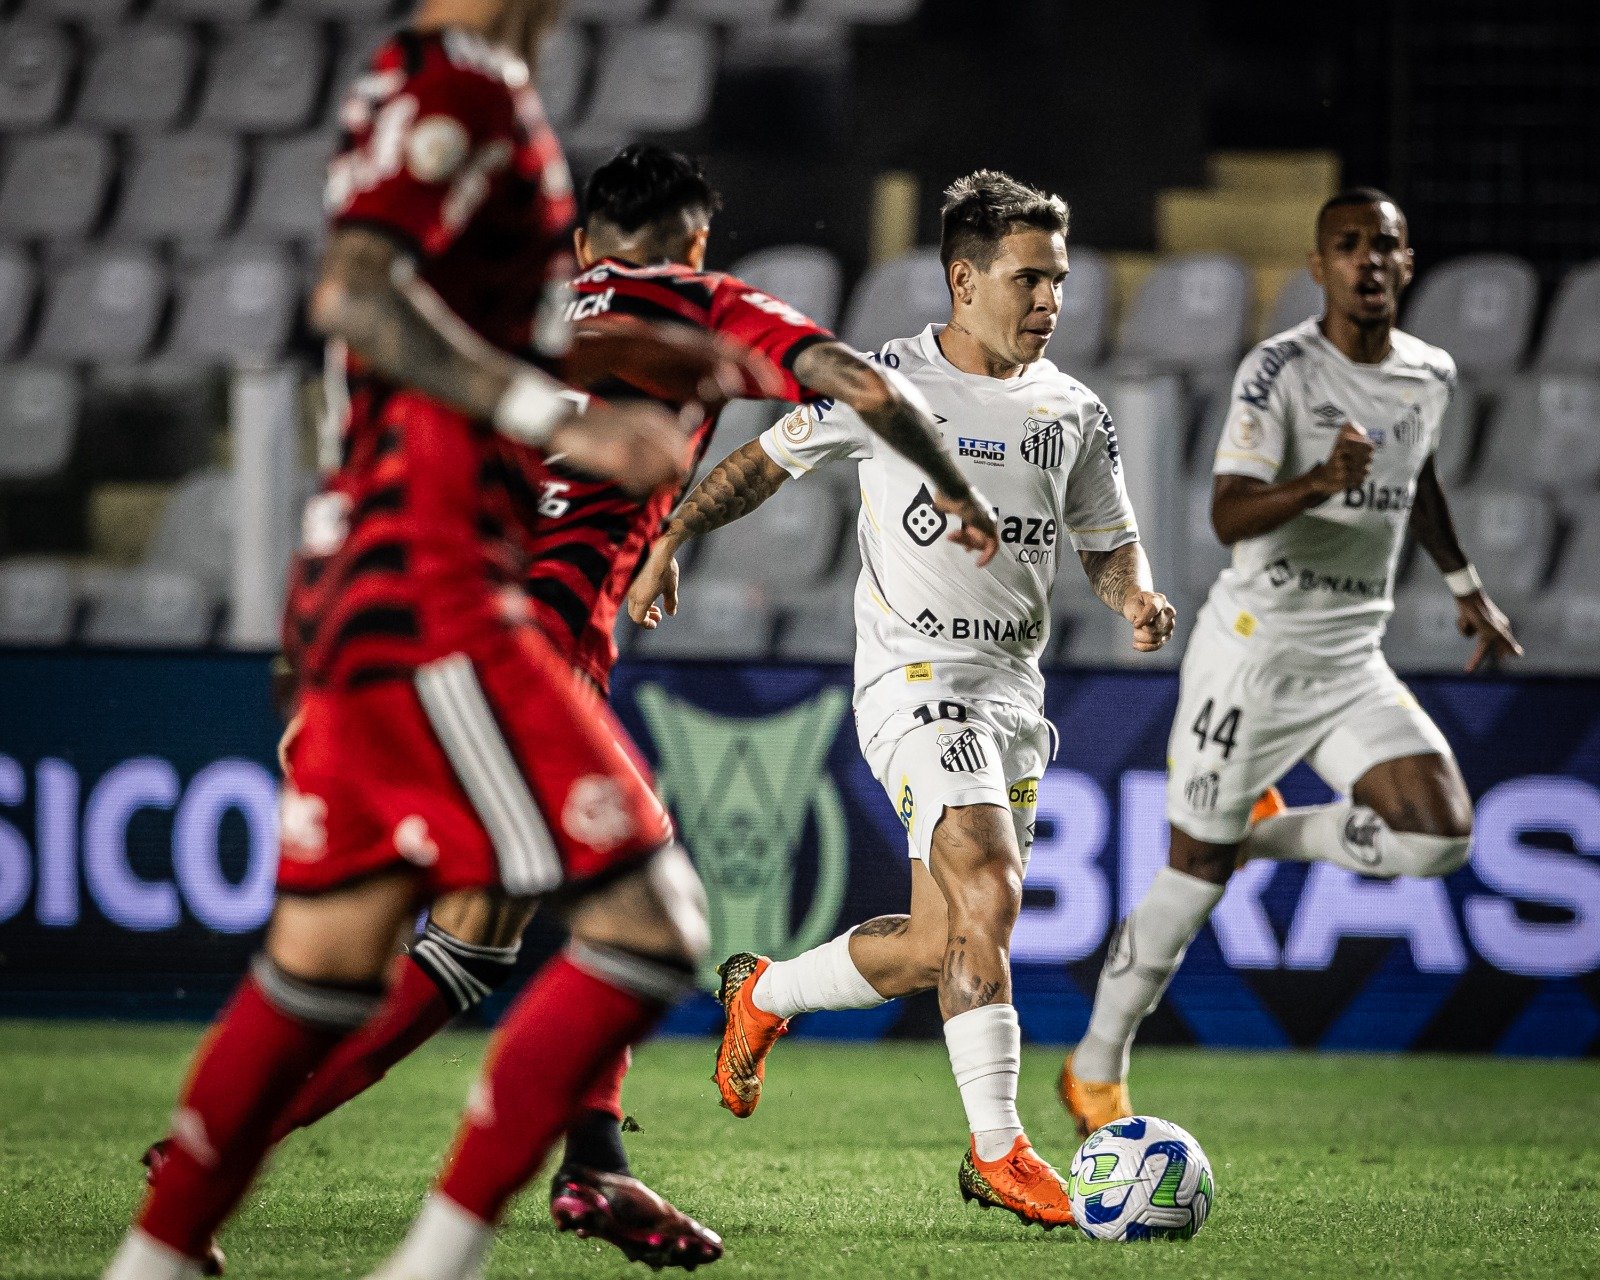 Under the watchful eyes of Paulo Tura, Santos loses to Flamengo at Villa